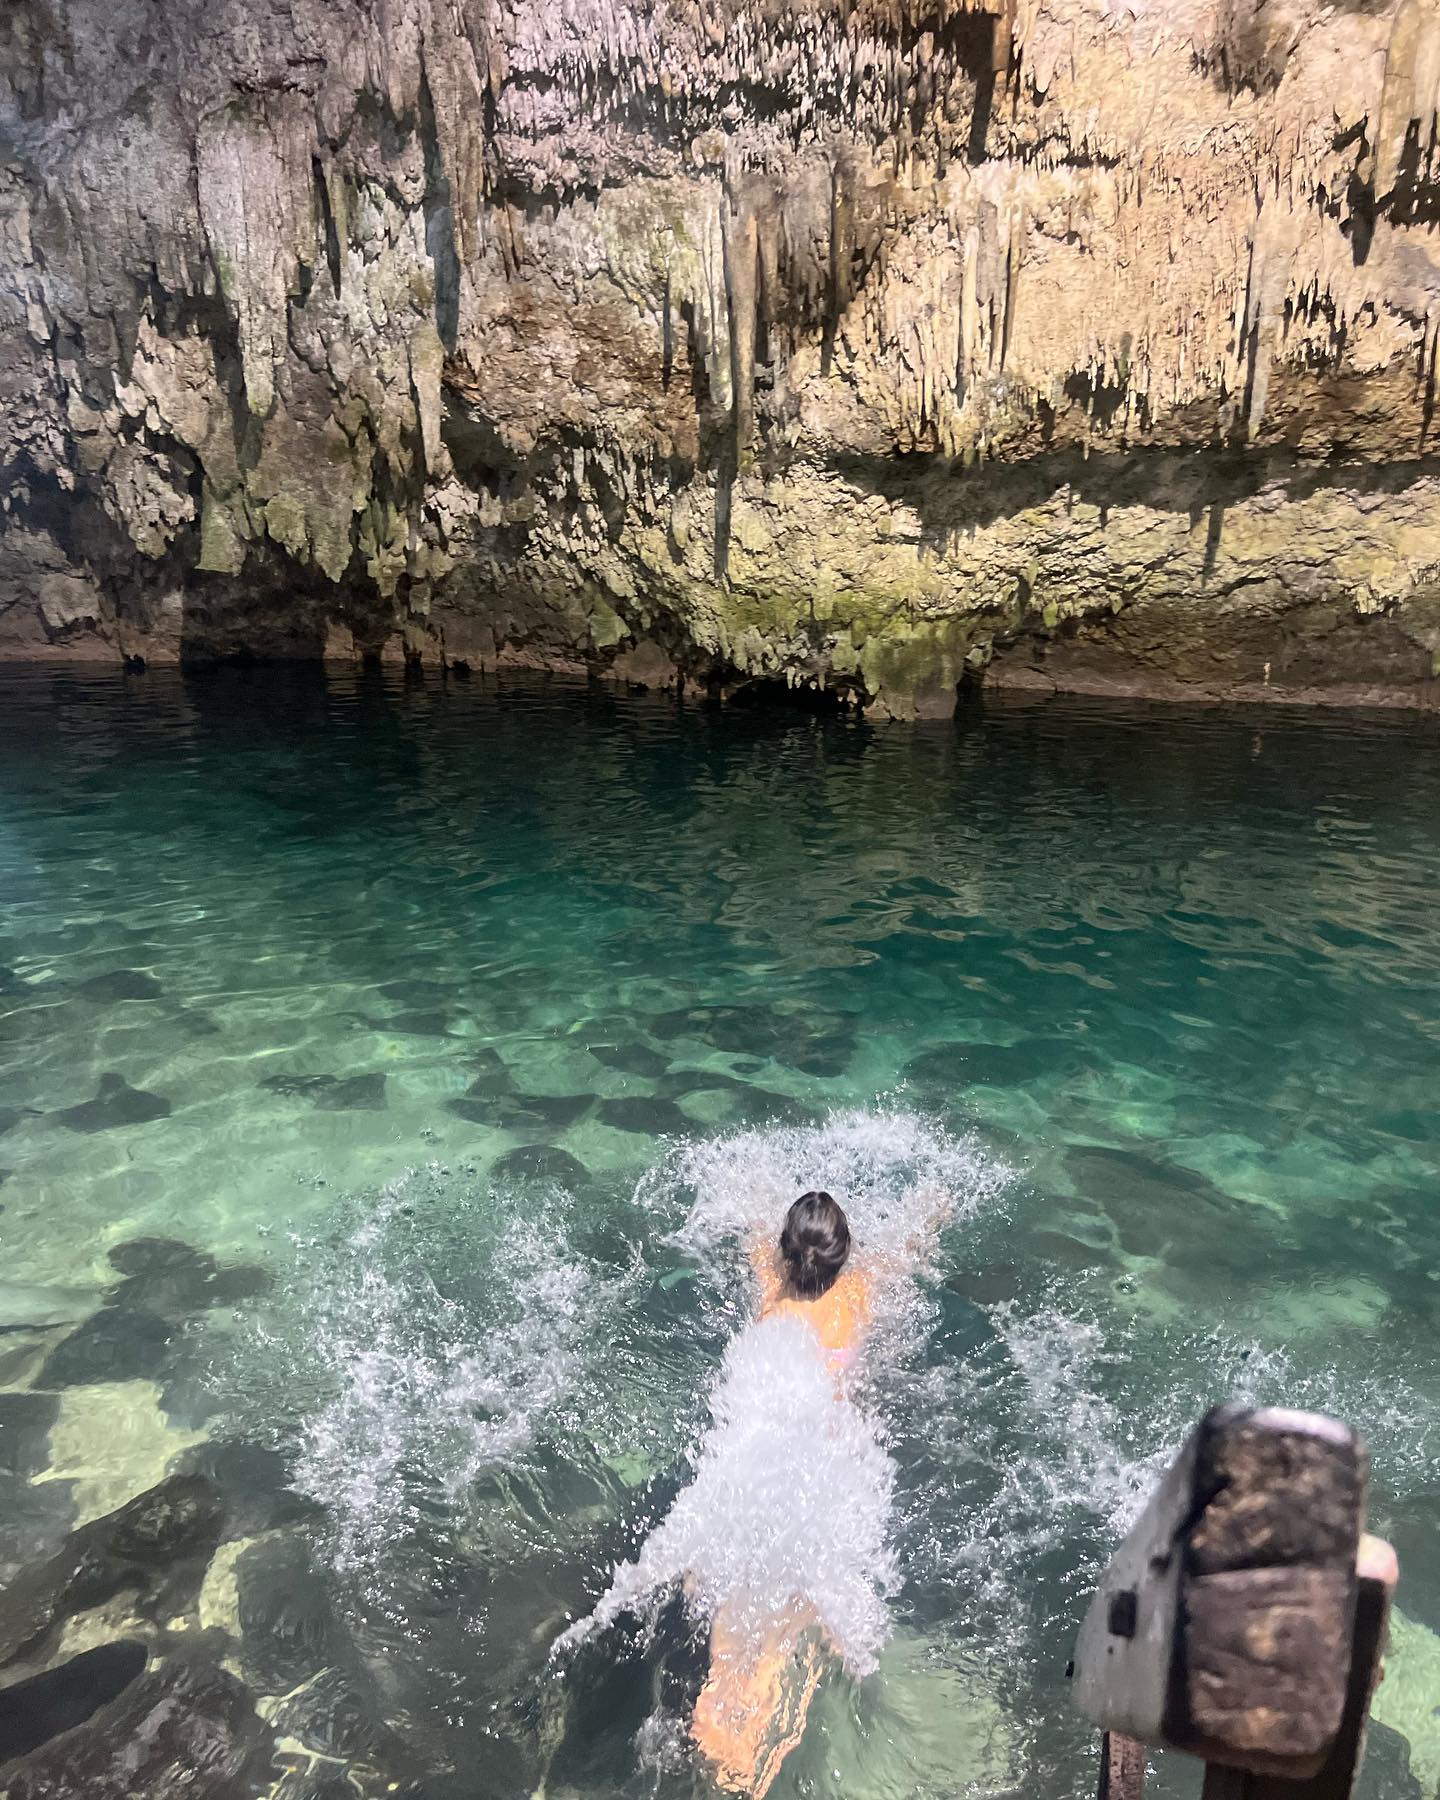 Jordana Brewster Dives Into a Cenote! - Photo 3